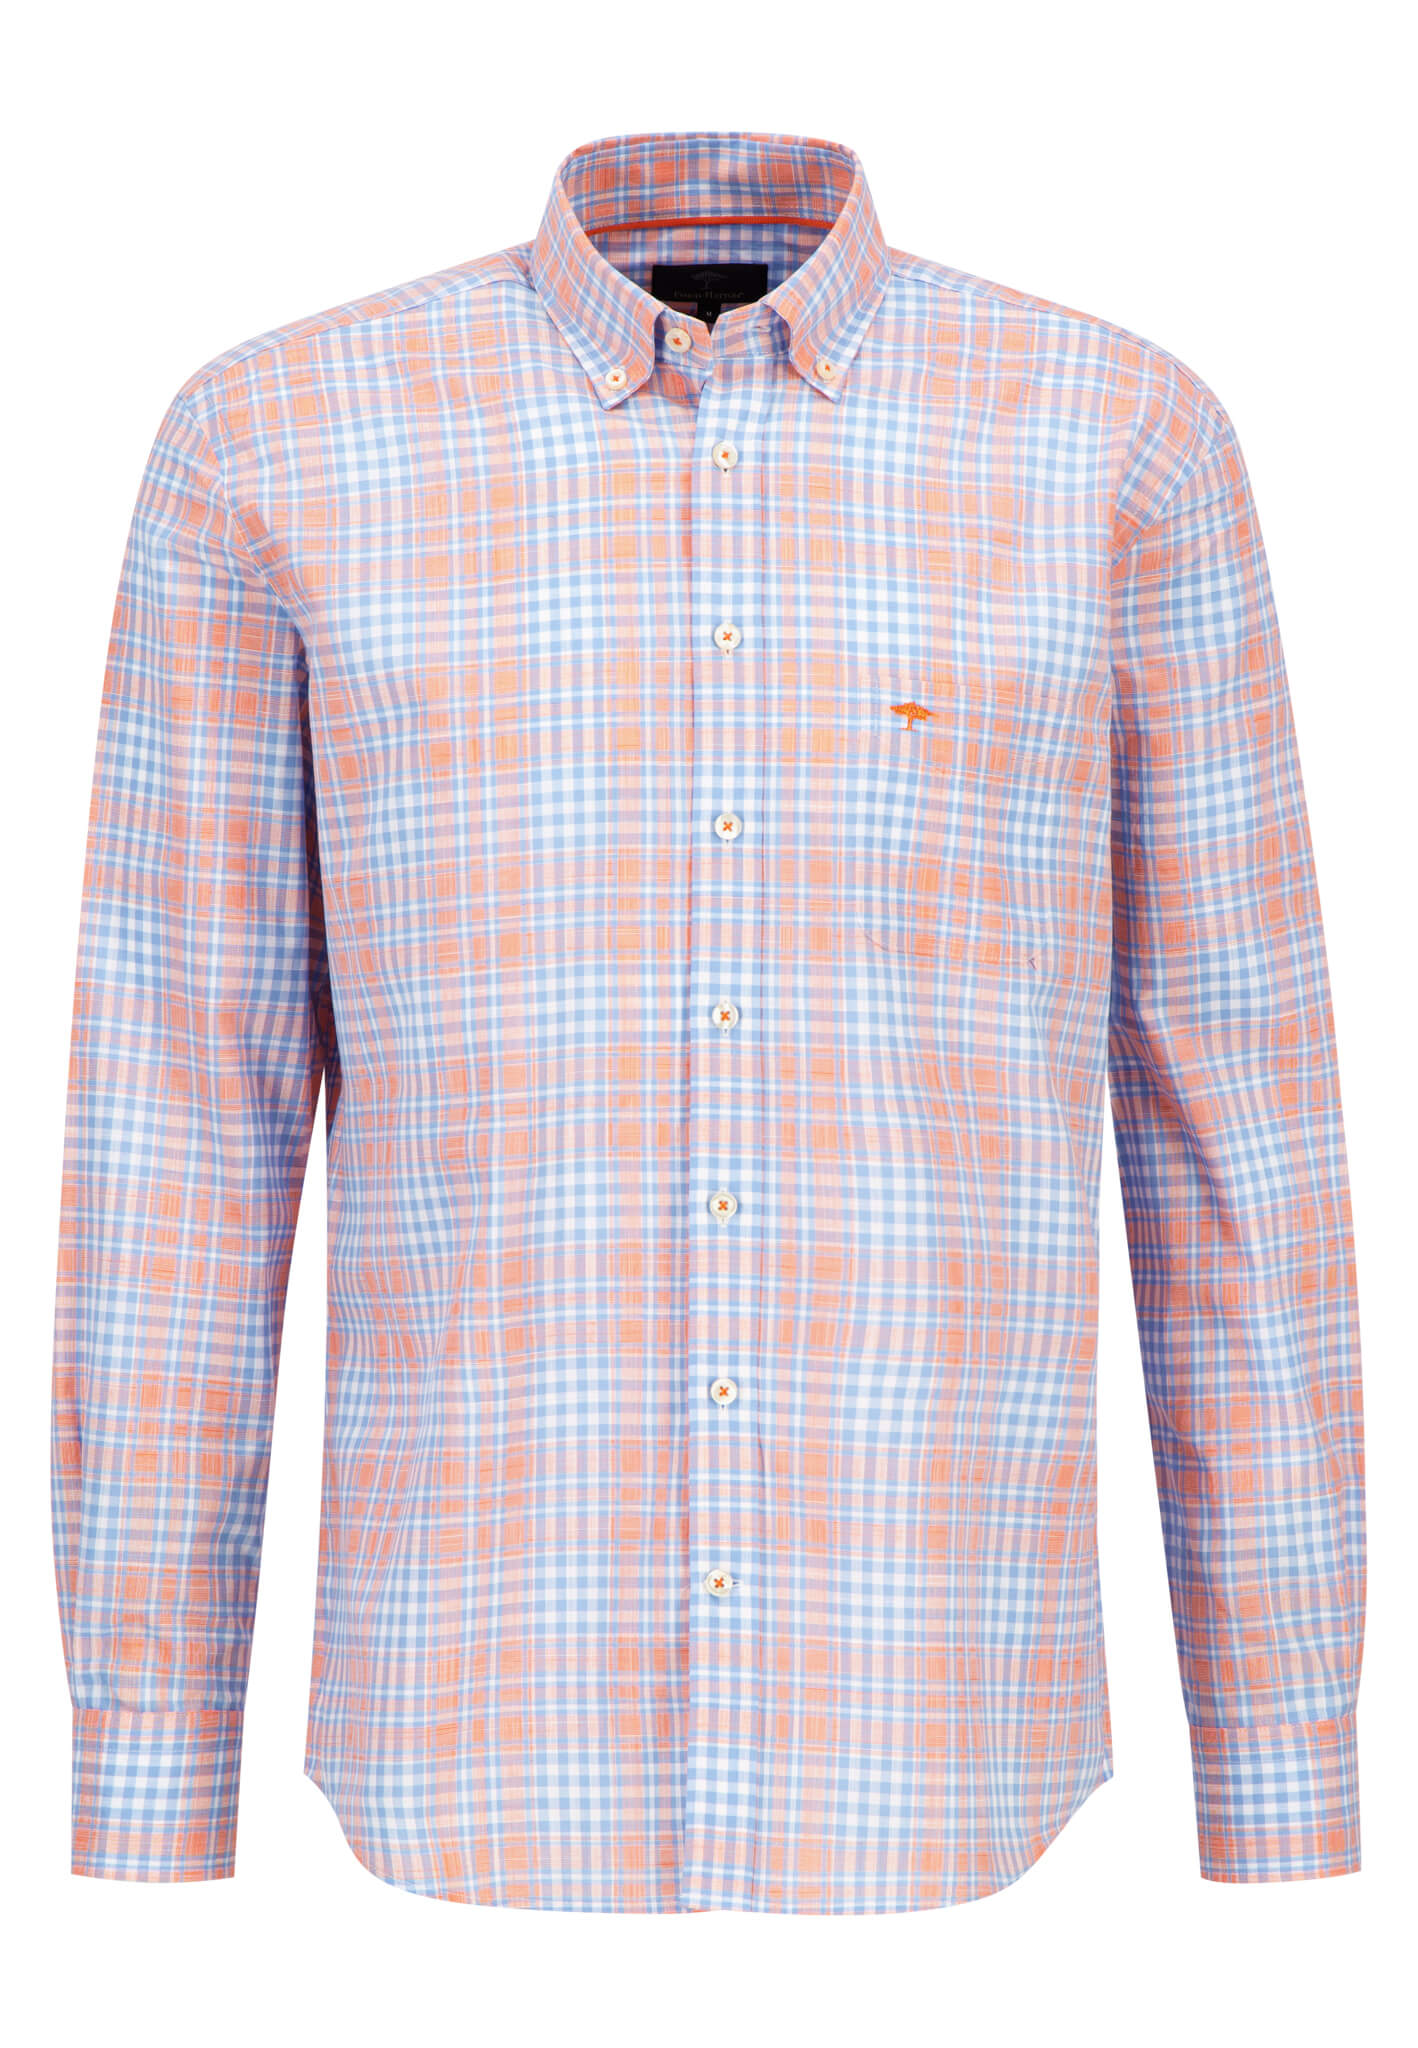 Fynch Hatton Tangerine Check Shirt front